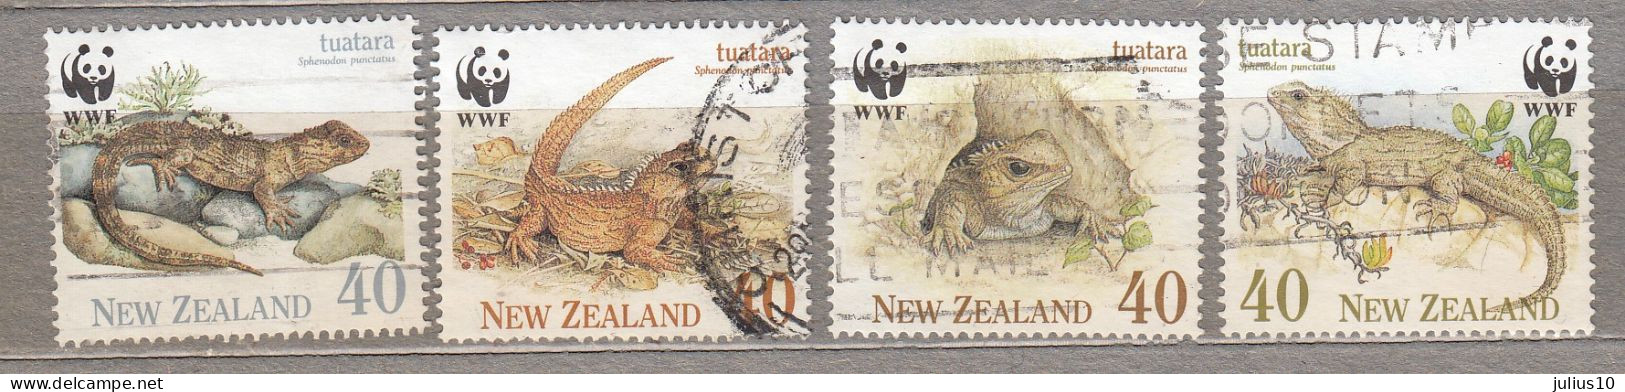 NEW ZEALAND 1991 WWF Reptiles Used(o) Mi 1160-1163   #34168 - Gebruikt